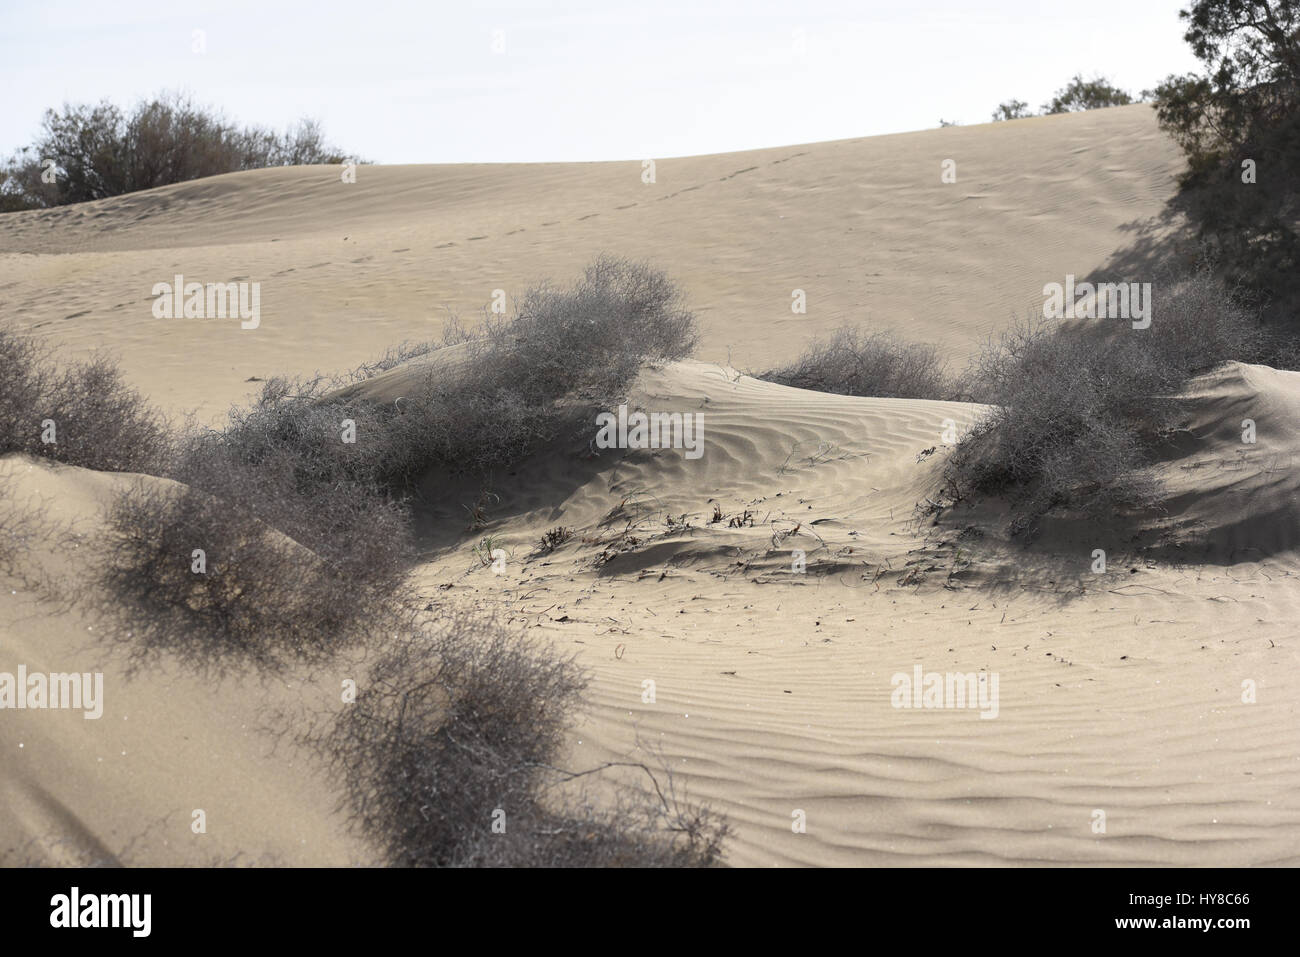 dunes of sand Stock Photo